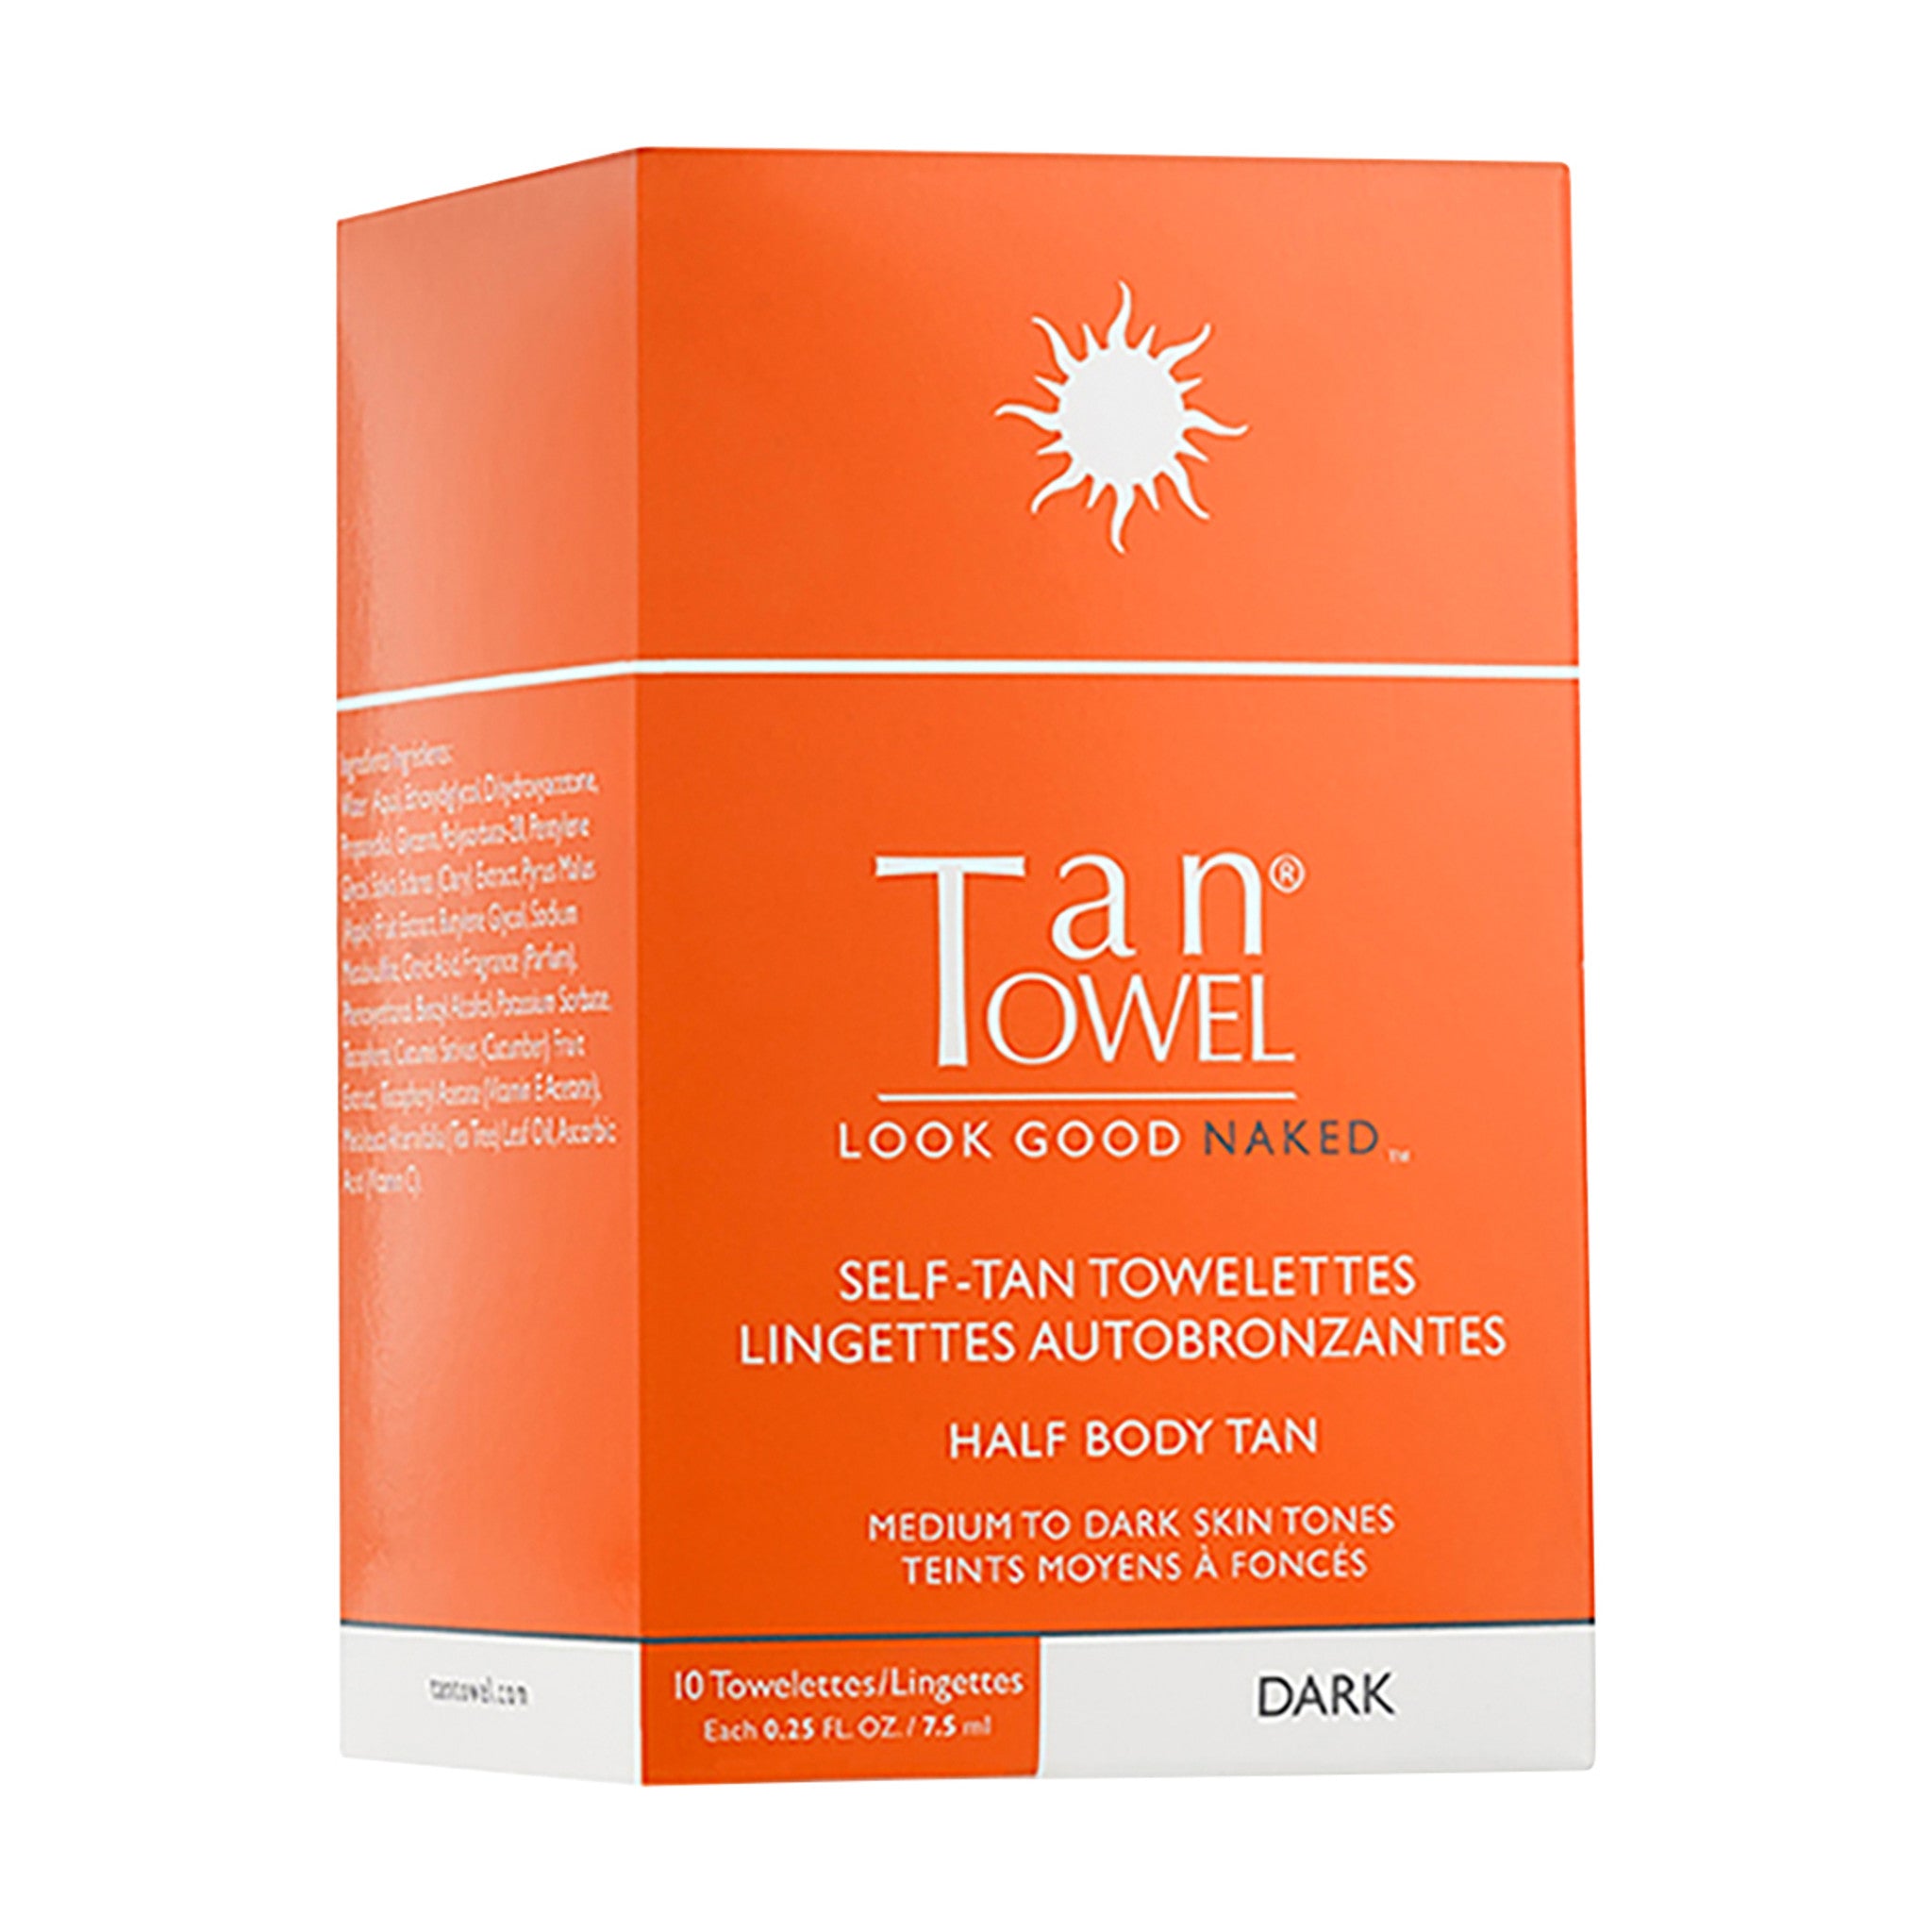 TanTowel Classic Half Body Self-Tan Towelette 10 Pack Color/Shade variant: Fair to Medium main image.